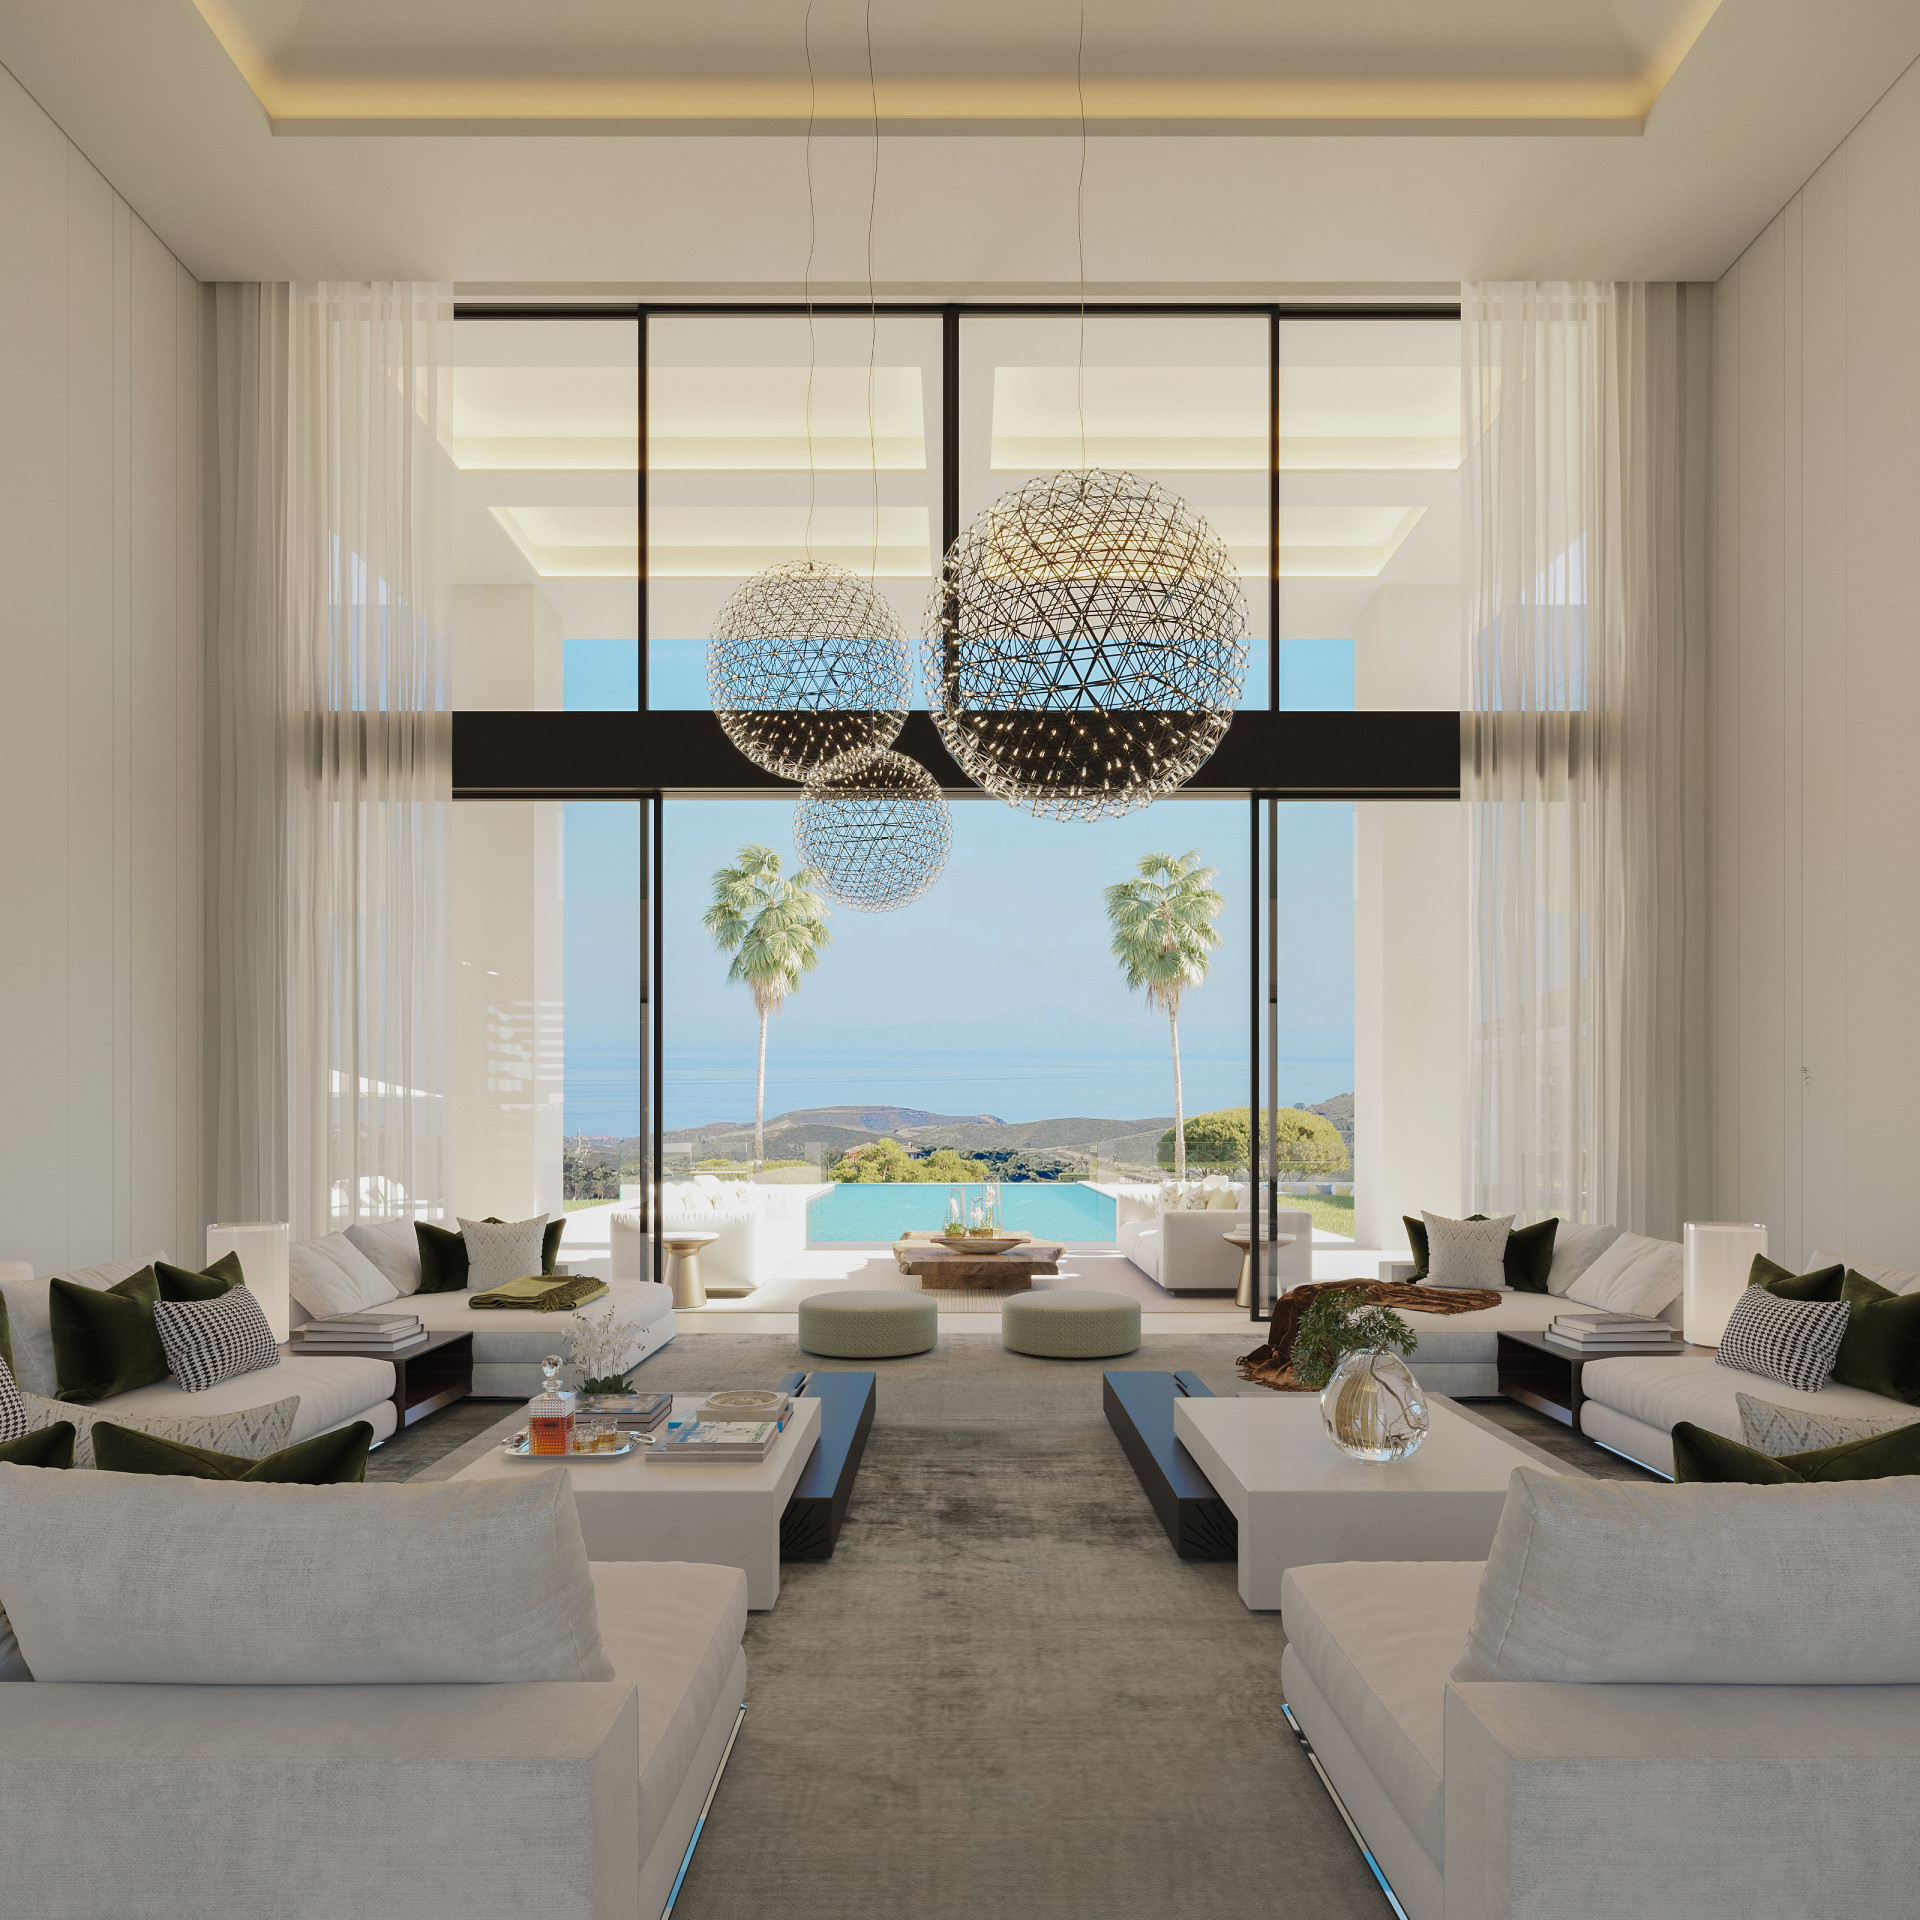 Luxury off-plan Mansion for sale in La Zagaleta